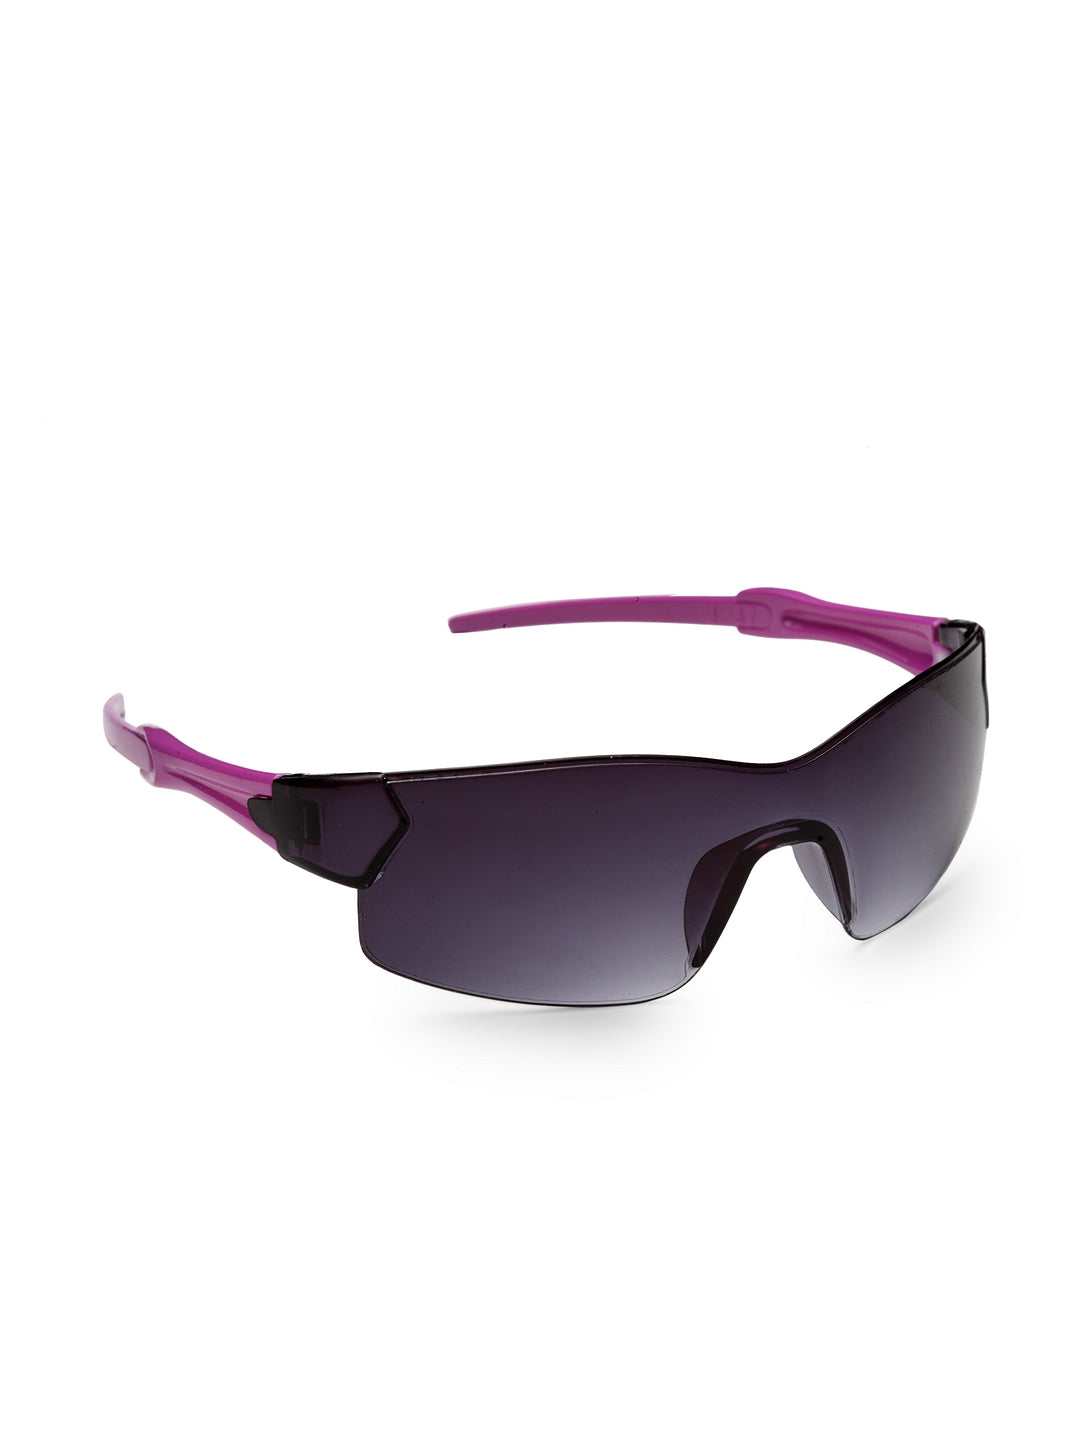 Stol'n Premium Attractive Fashionable UV-Protected Sunglasses - Dark Pink